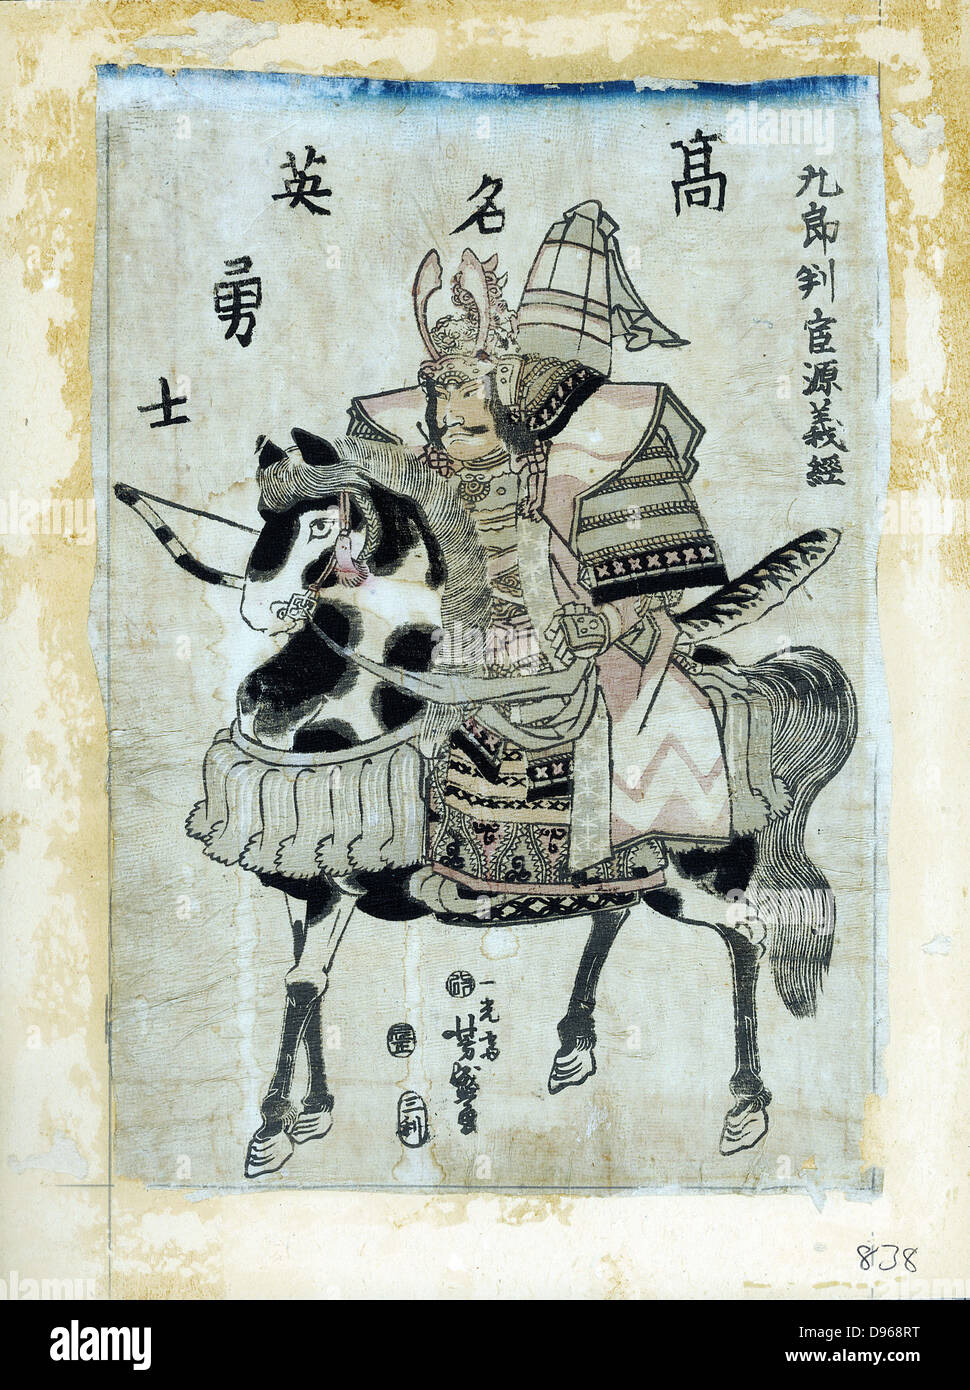 The Warrior Minamoto No Yoshitsune on Horseback from series 'Famous Warrior Heroes' by Utagawa Yoshimori (1830-1885) published 1886. Japanese coloured woodblock. Stock Photo